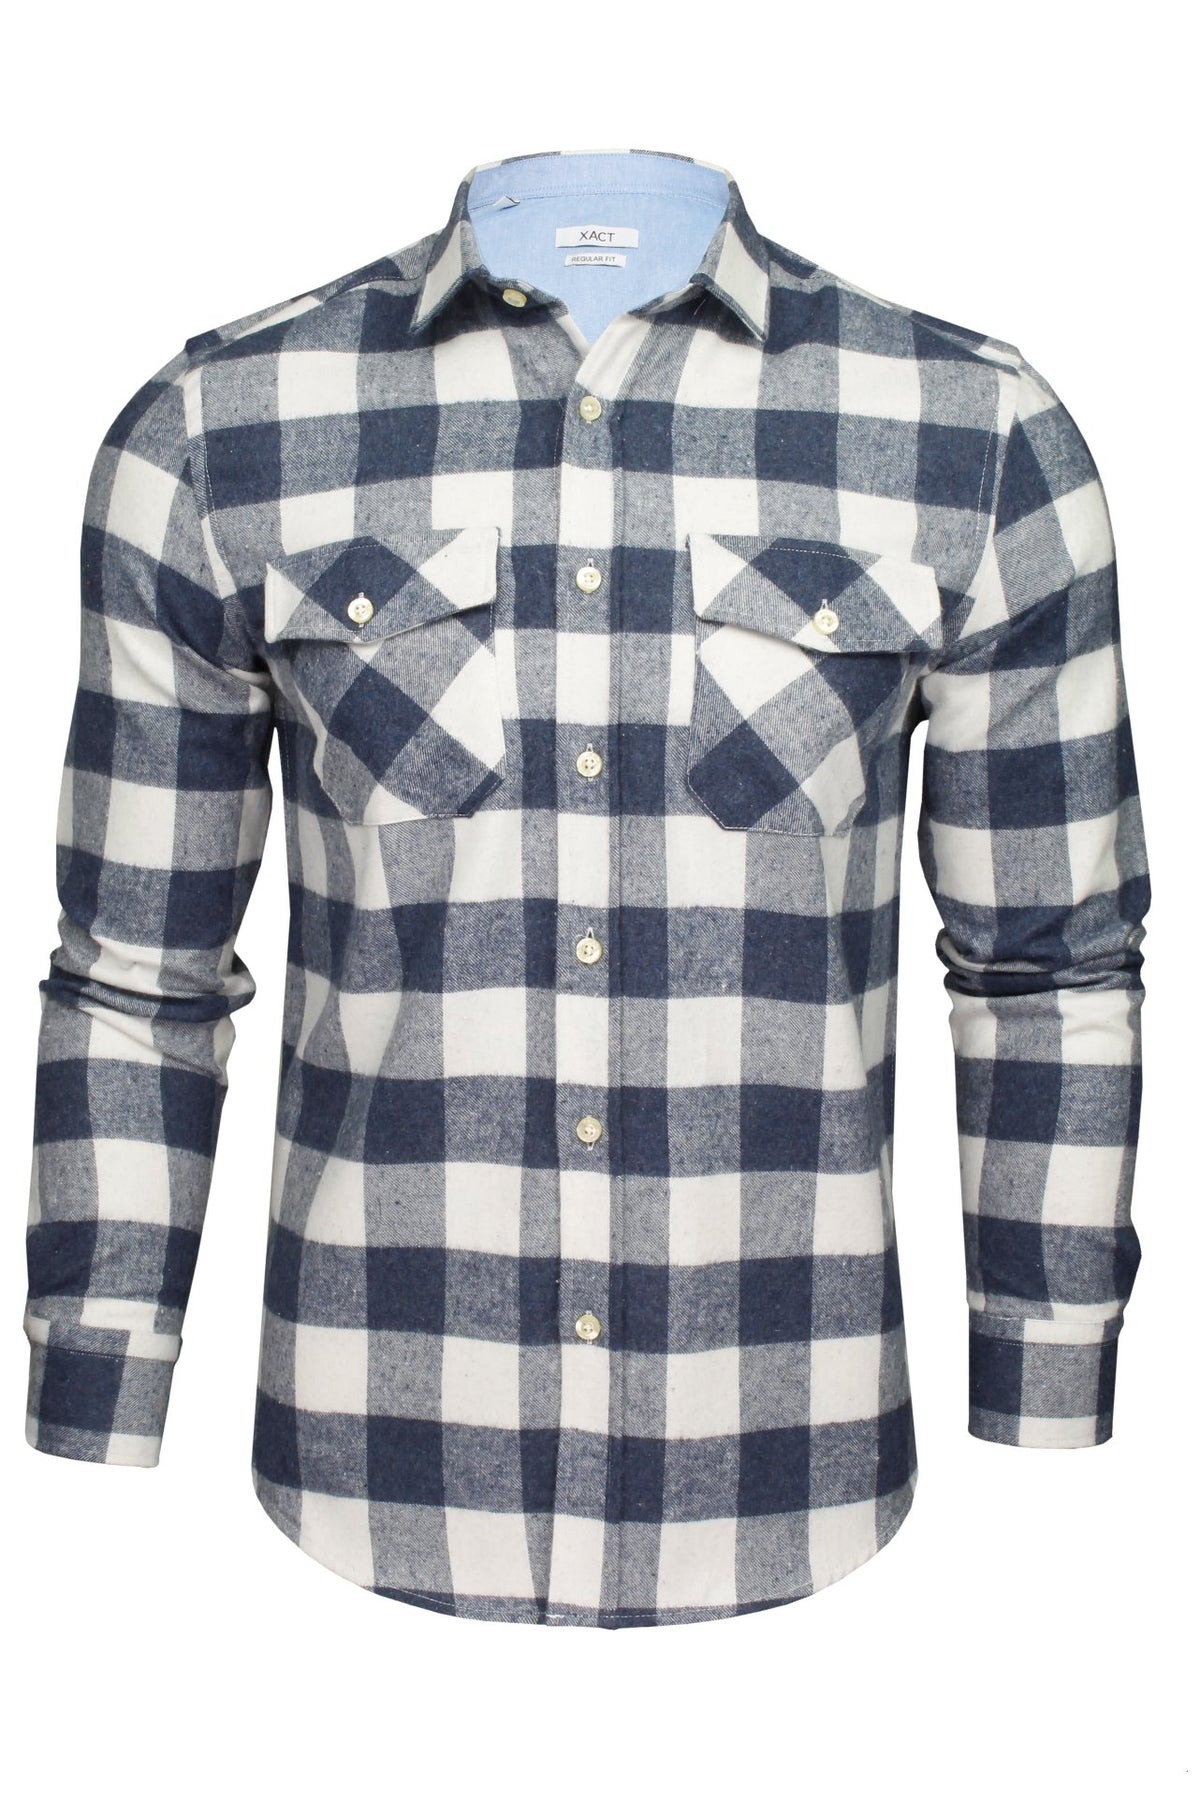 Xact Mens Soft Flannel Buffalo Check Shirt - Long Sleeved, 01, Xsh1136, Jack - Navy/ White